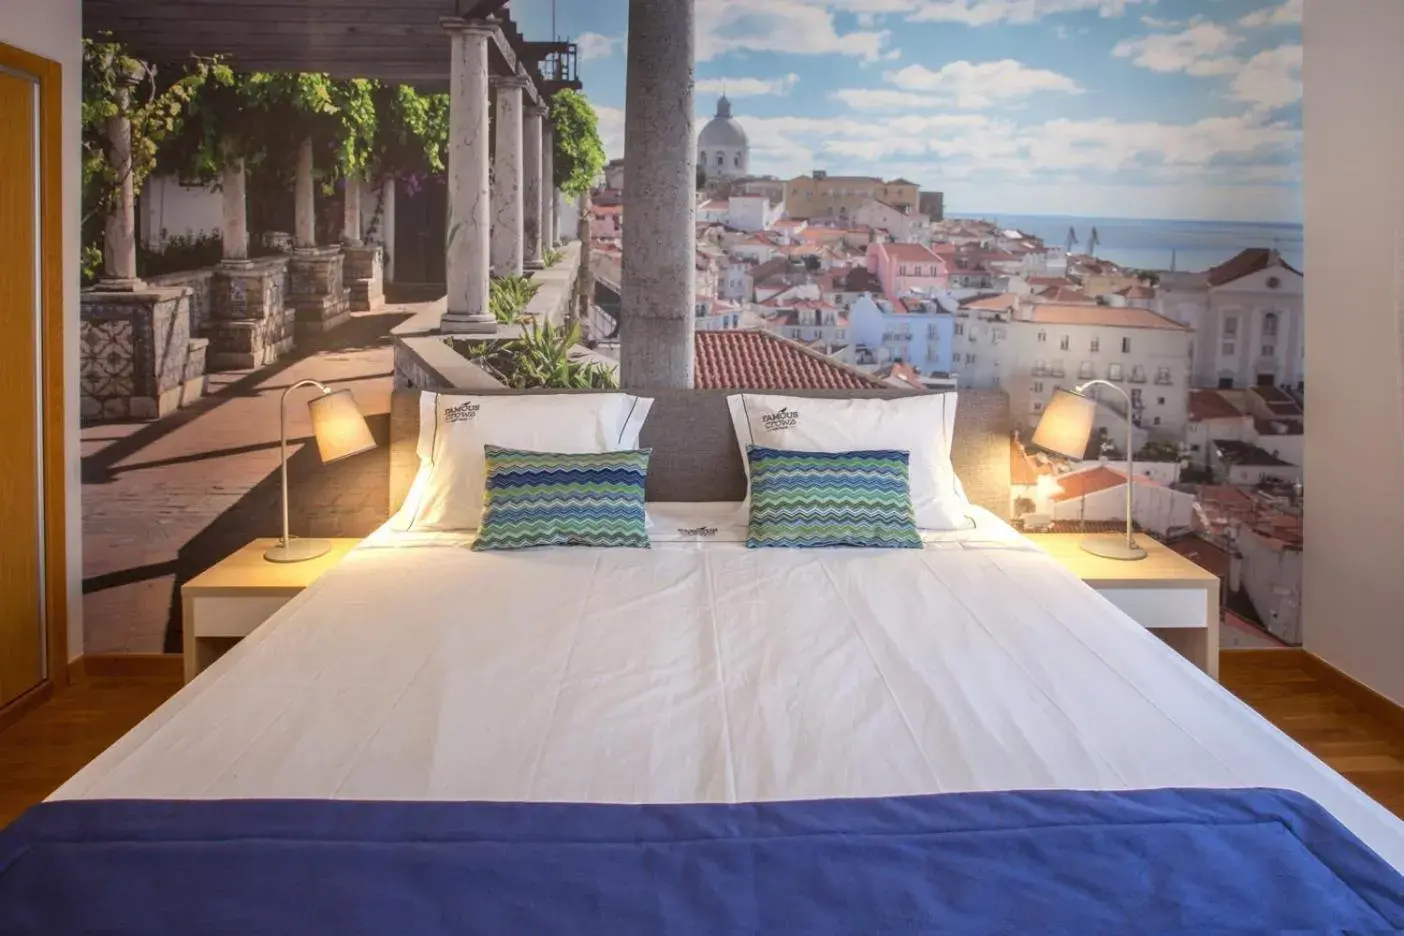 Bed in Famous Crows Lisbon Suites